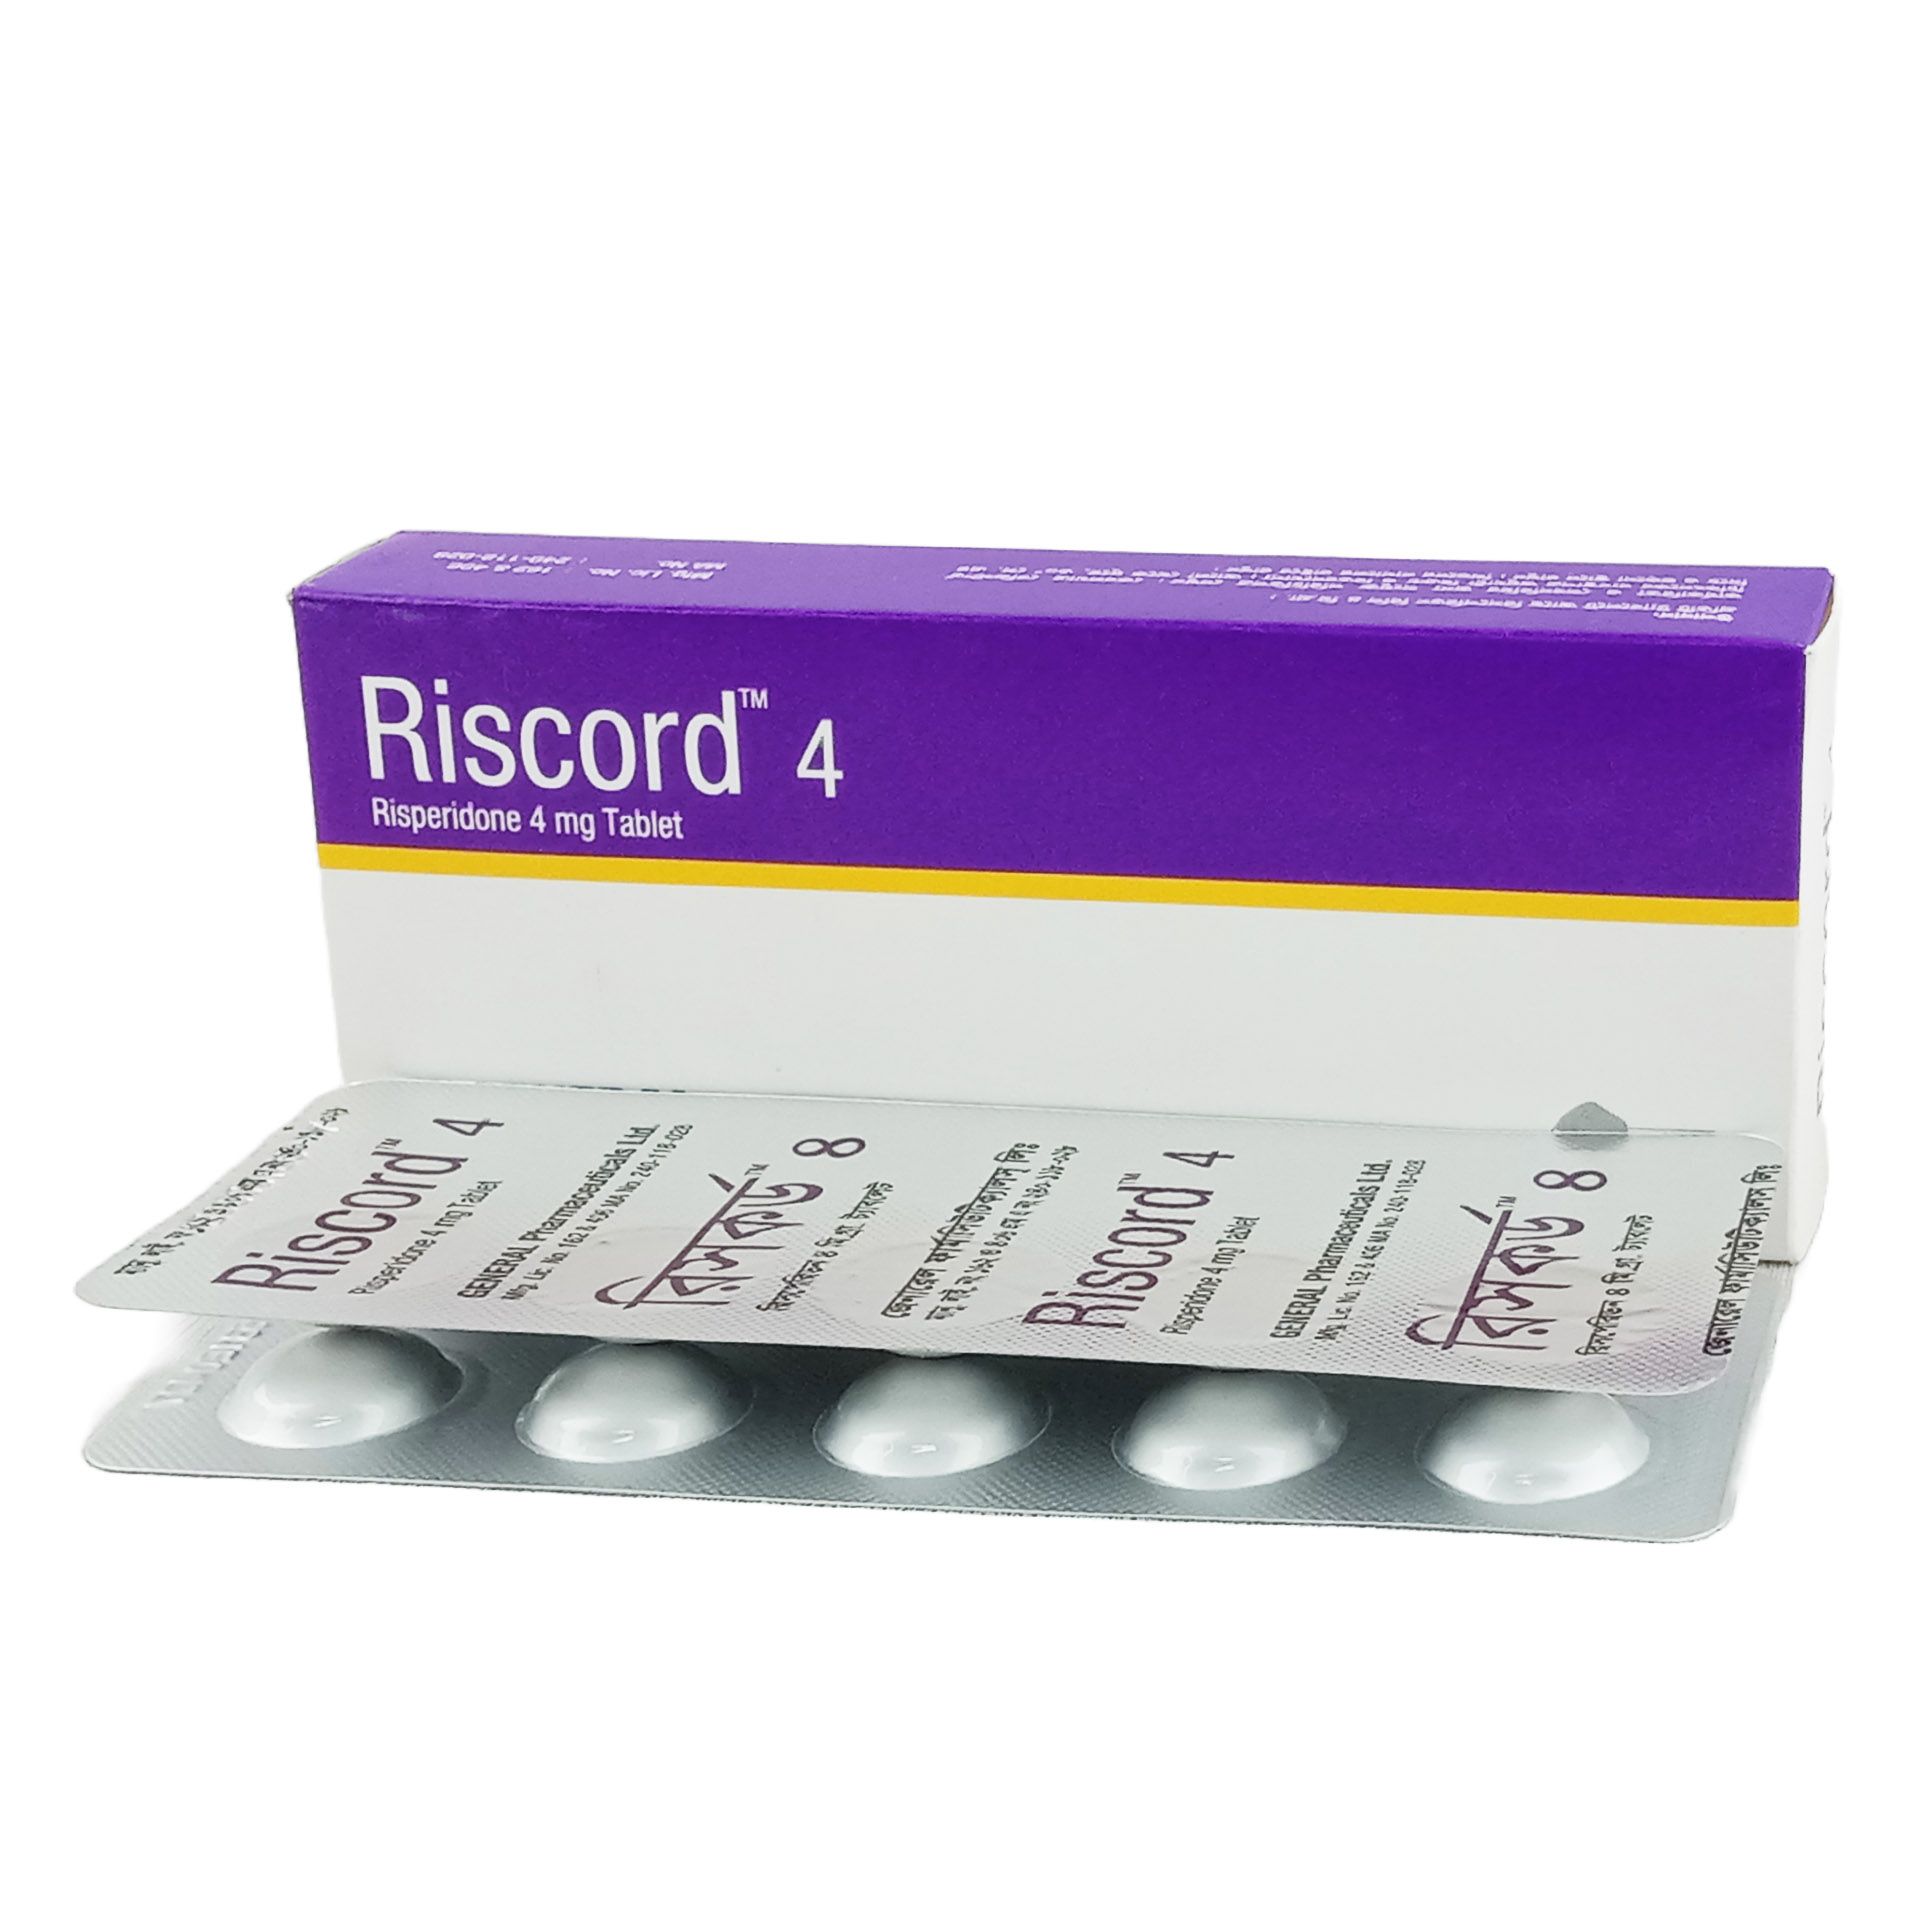 Riscord 4mg Tablet